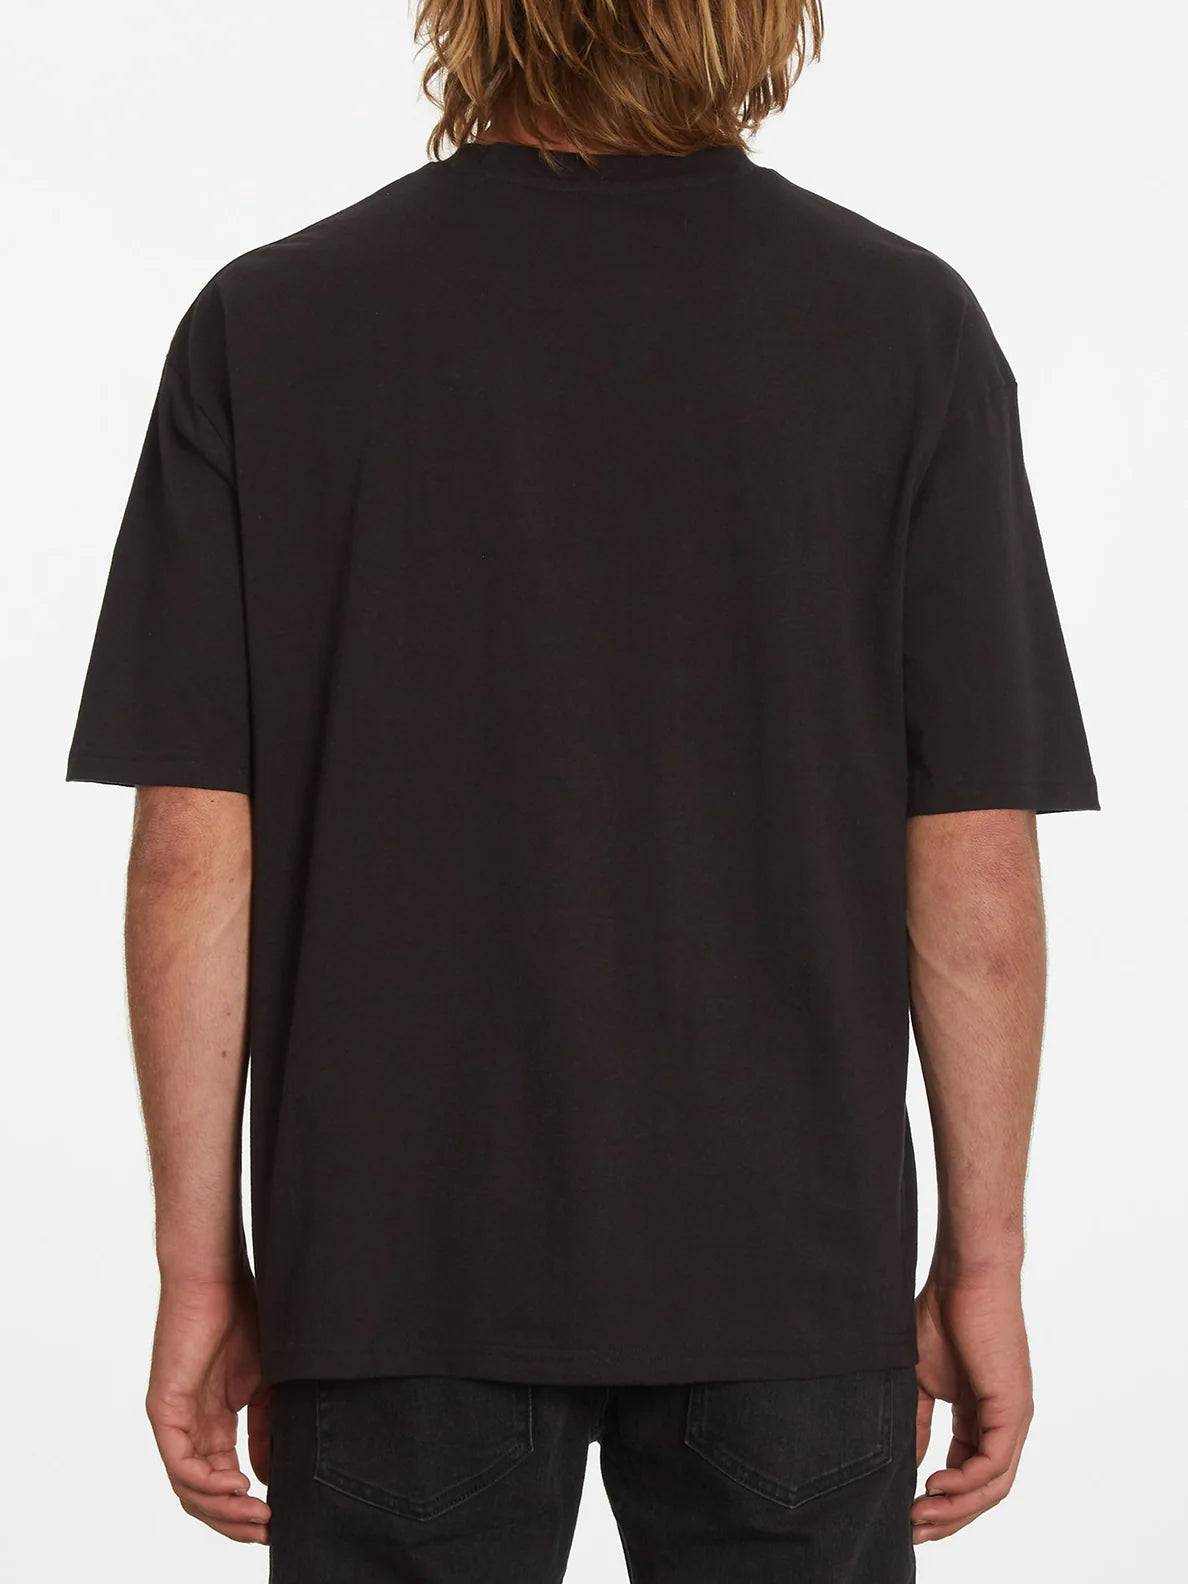 Volcom Shredead Schwarzes T-Shirt